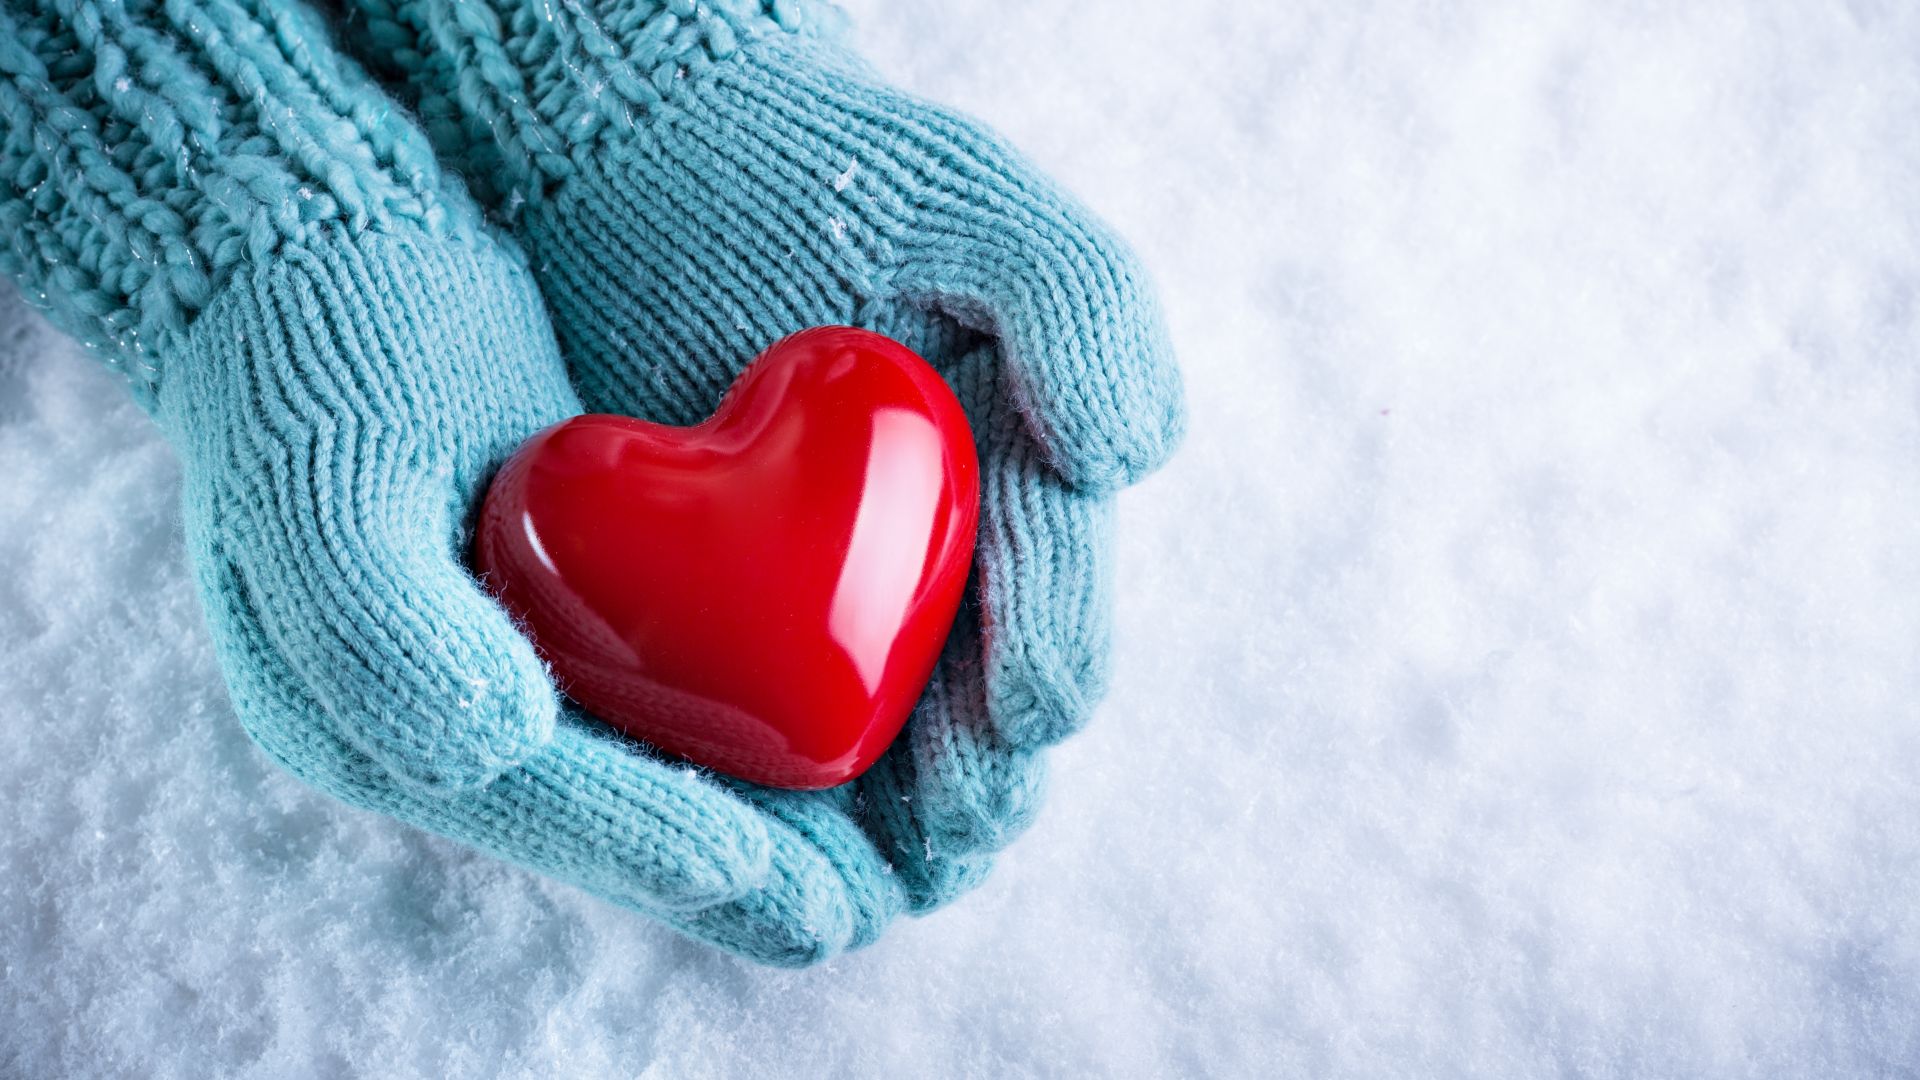 фото любовь, сердце, love image, hand, snow, heart, 4k (horizontal)